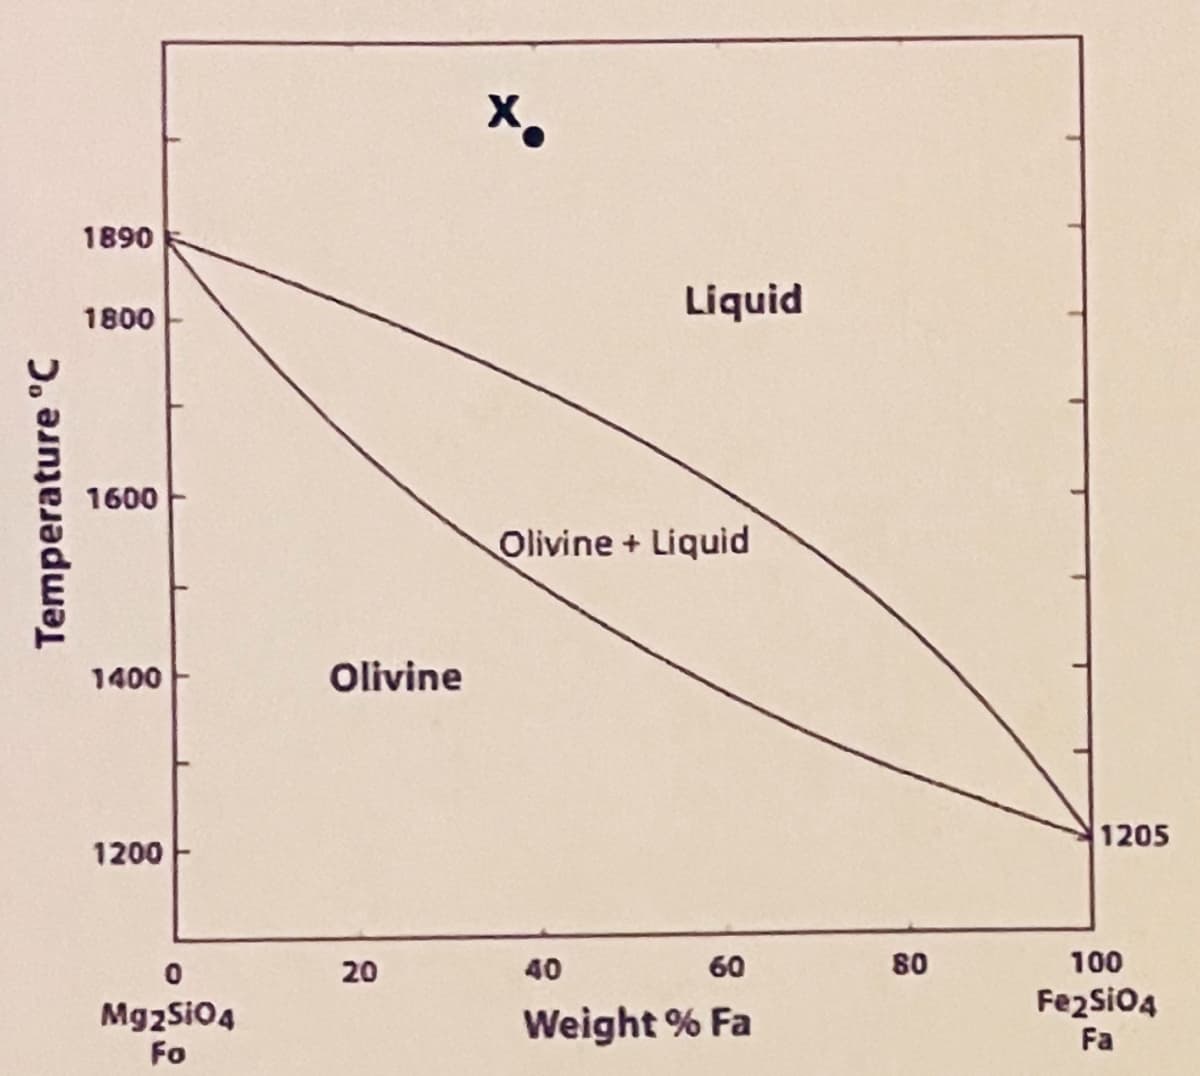 Temperature °C
1890
1800
1600
1400
1200
0
Mg2SiO4
Fo
Olivine
20
x.
Liquid
Olivine + Liquid
40
60
Weight % Fa
80
1205
100
Fe2SiO4
Fa